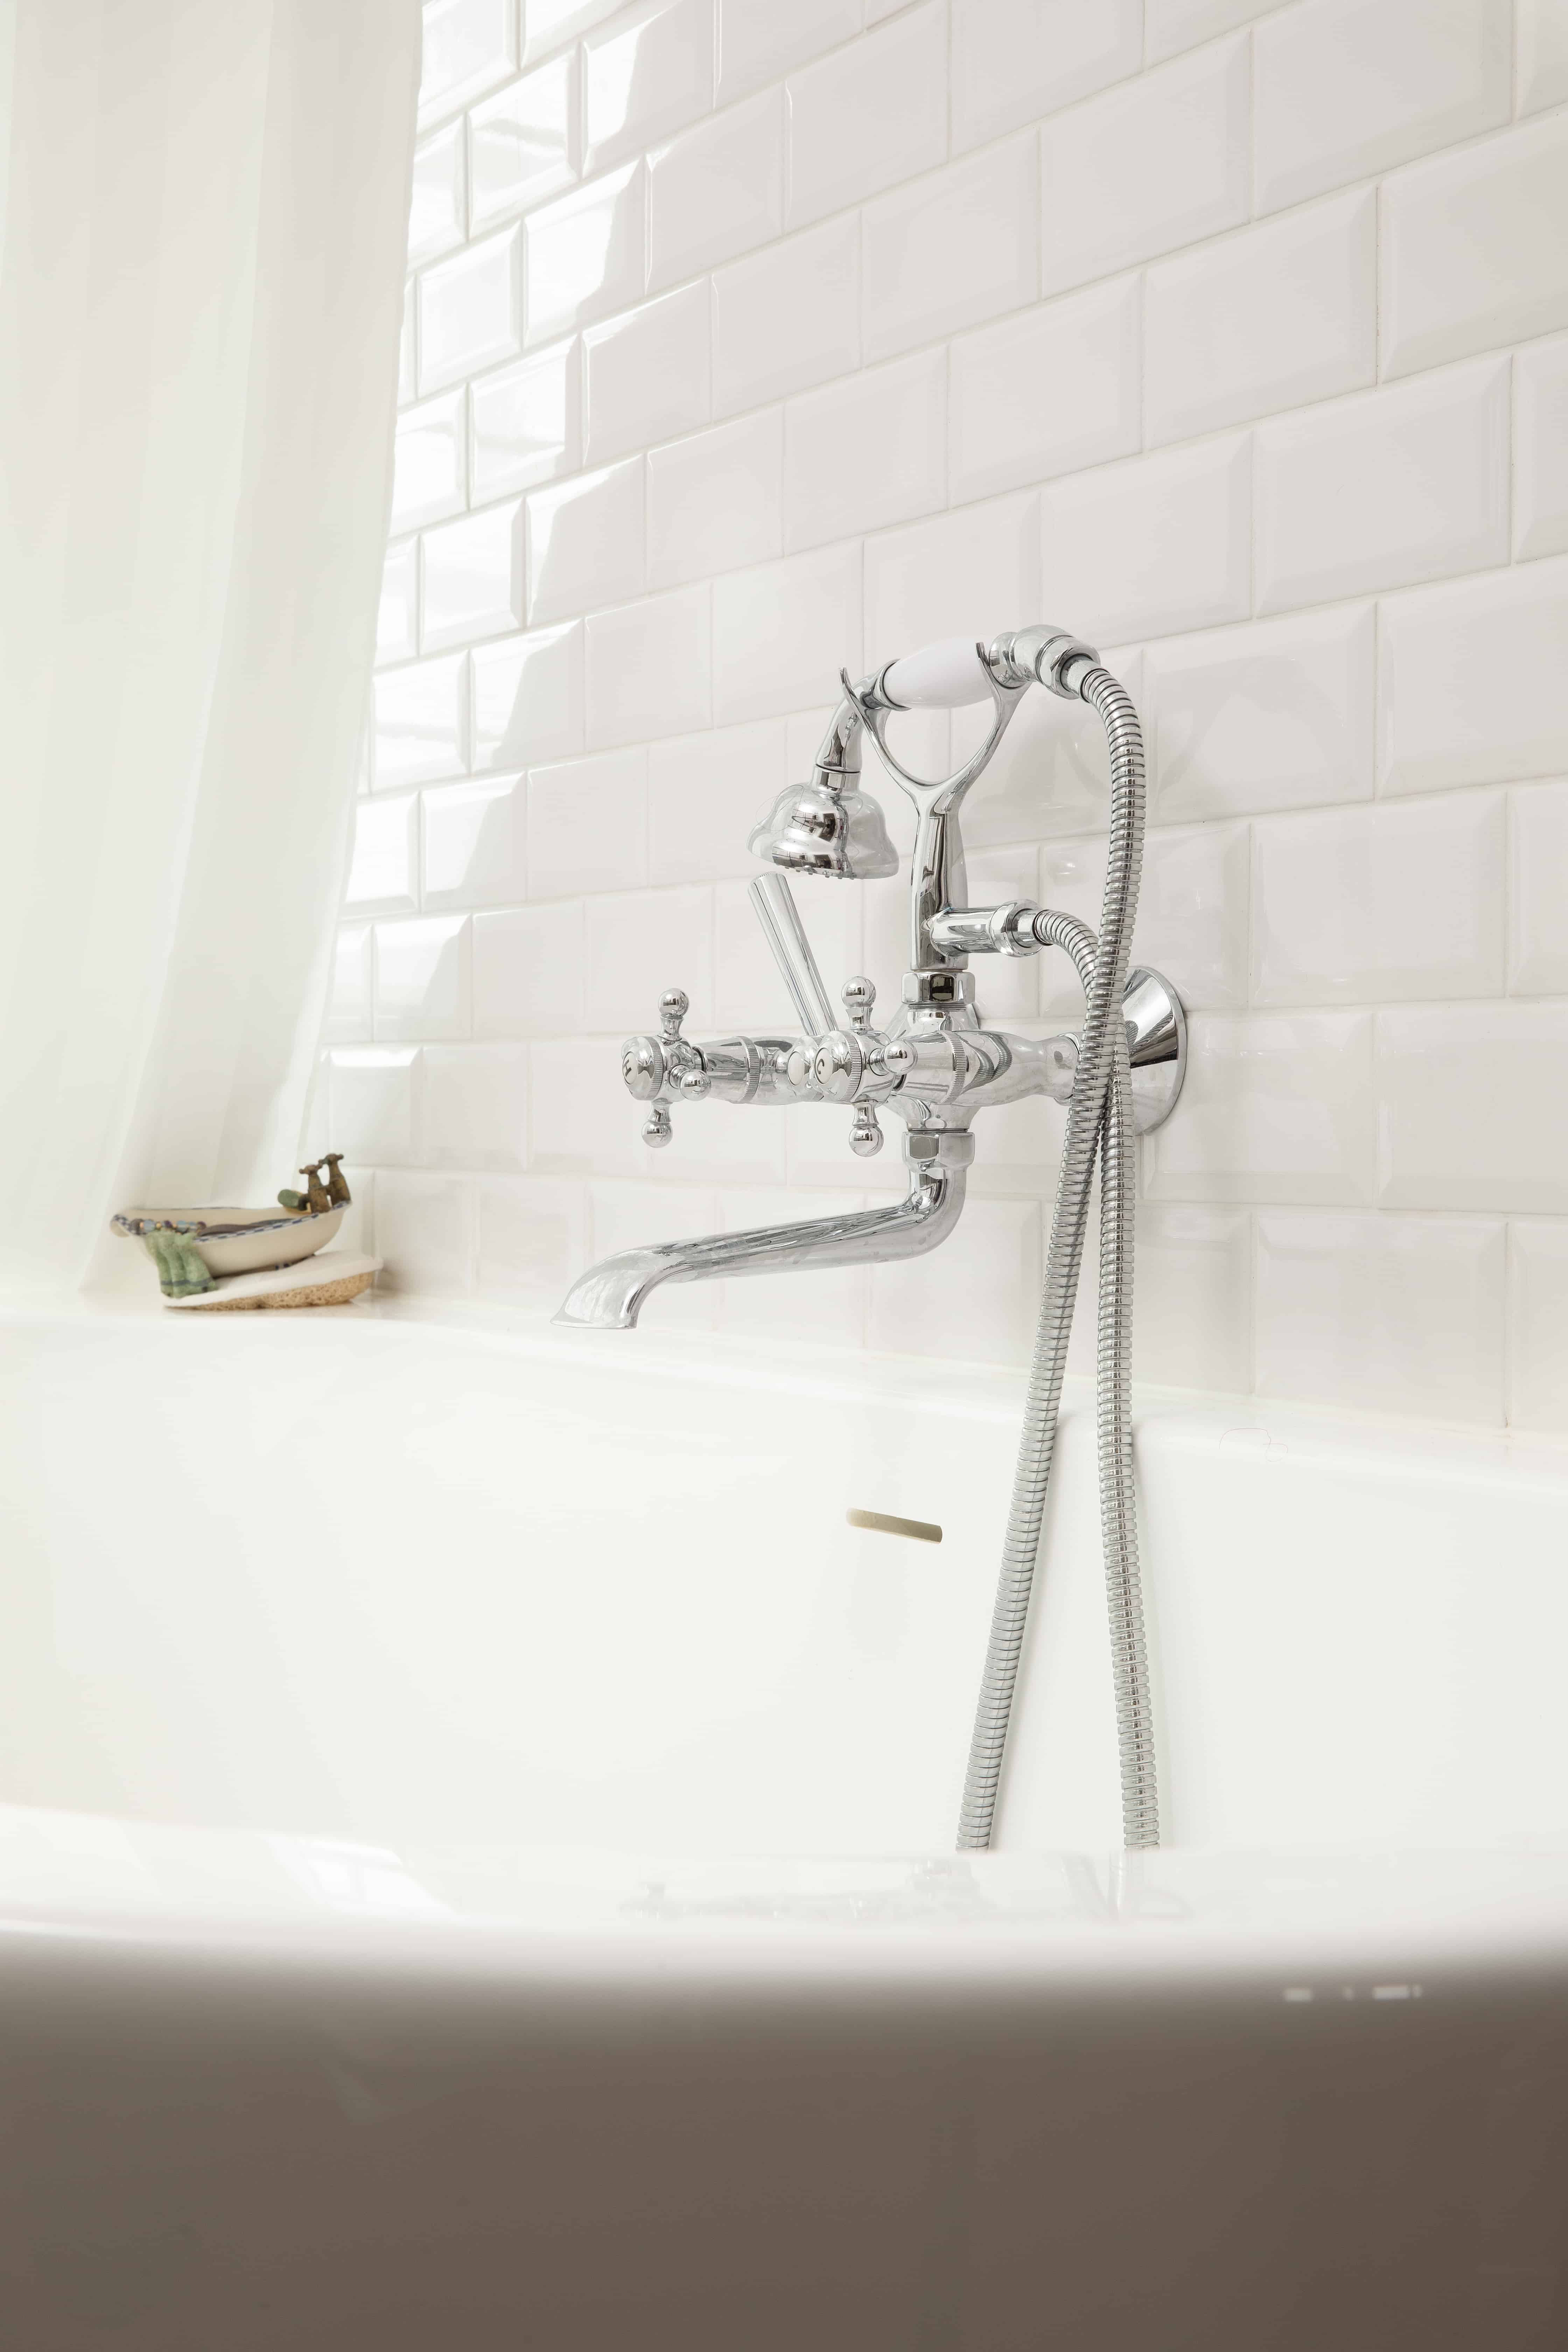 Stijlvolle badkamer, badkuip omring door witte kleine wandtegels - Roeselare